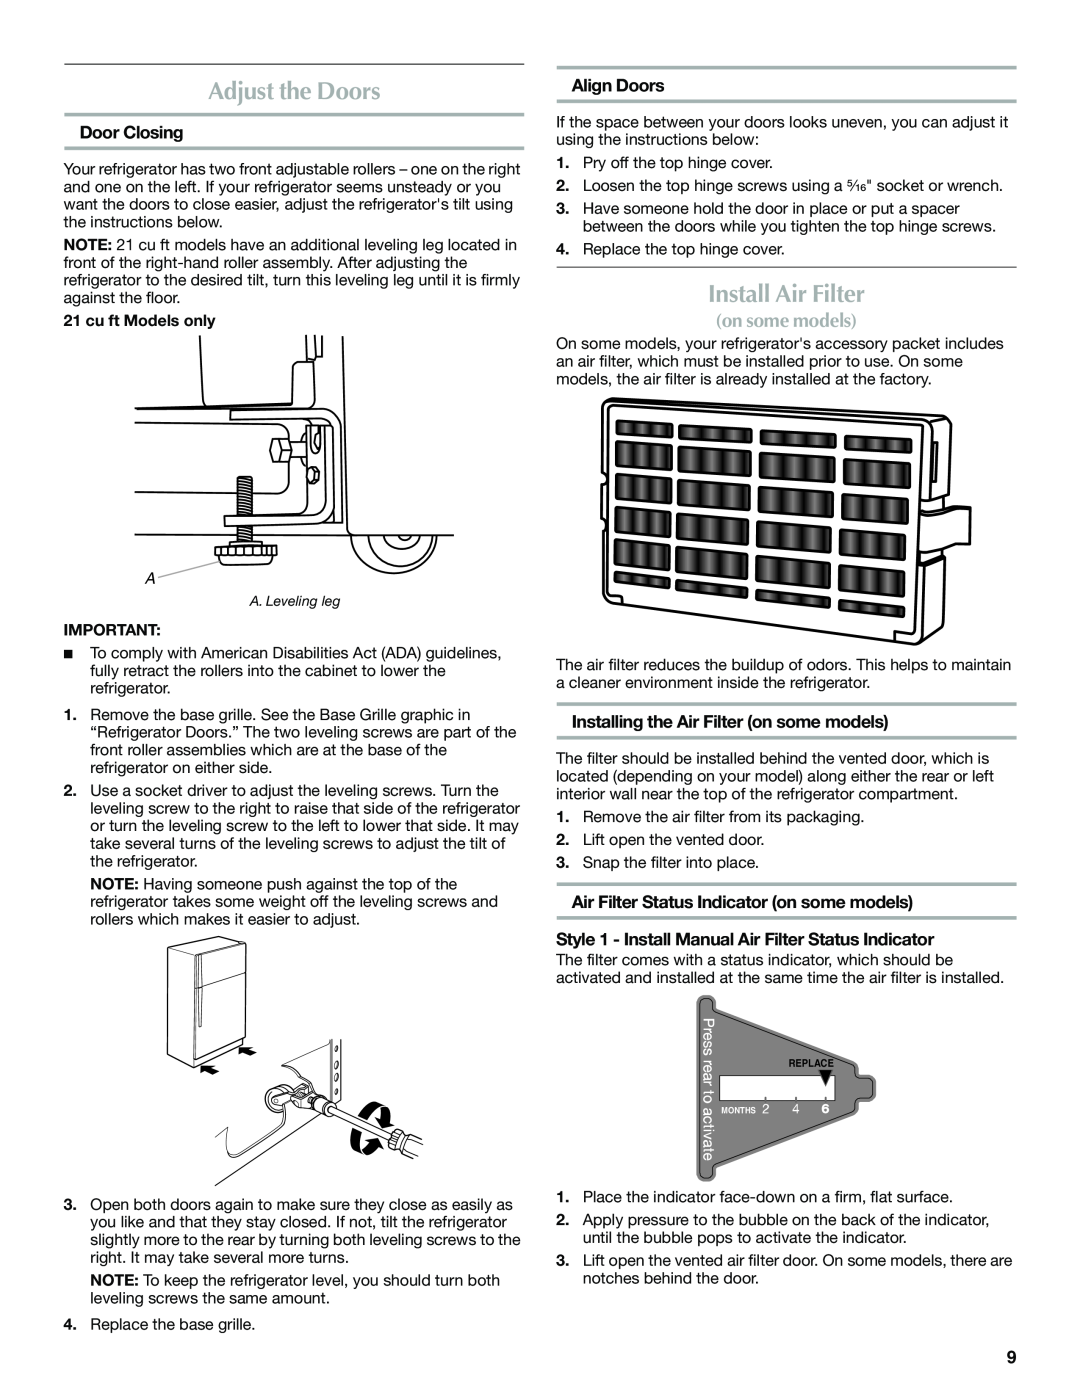 Maytag W10359302A installation instructions Adjust the Doors, Install Air Filter, on some models, Door Closing, Align Doors 